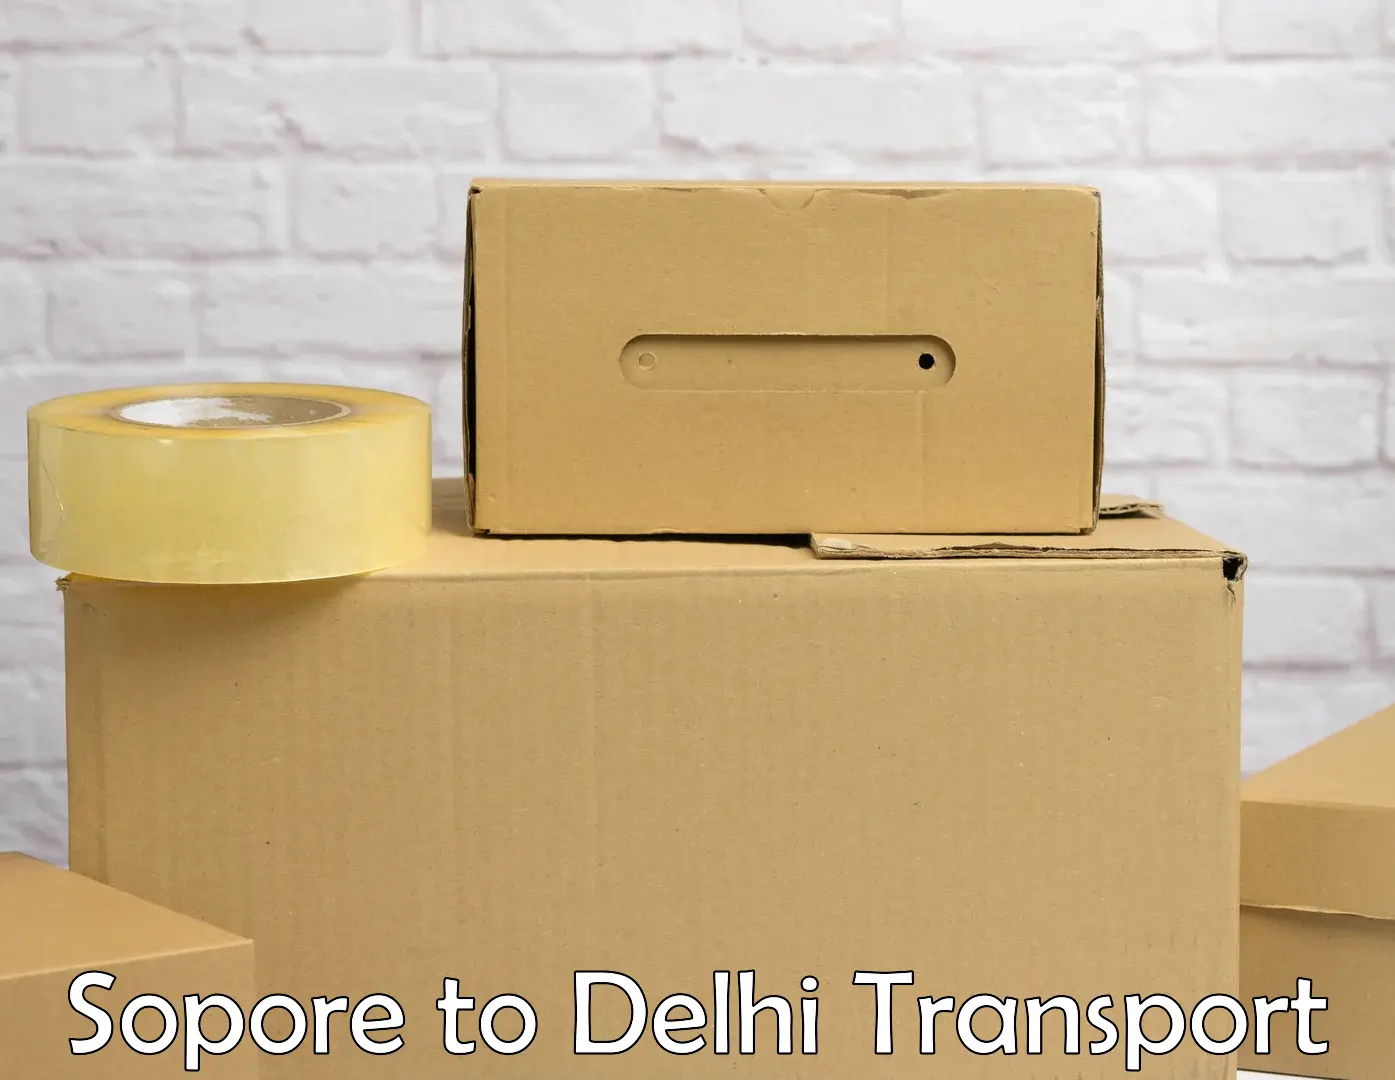 Two wheeler parcel service Sopore to NCR